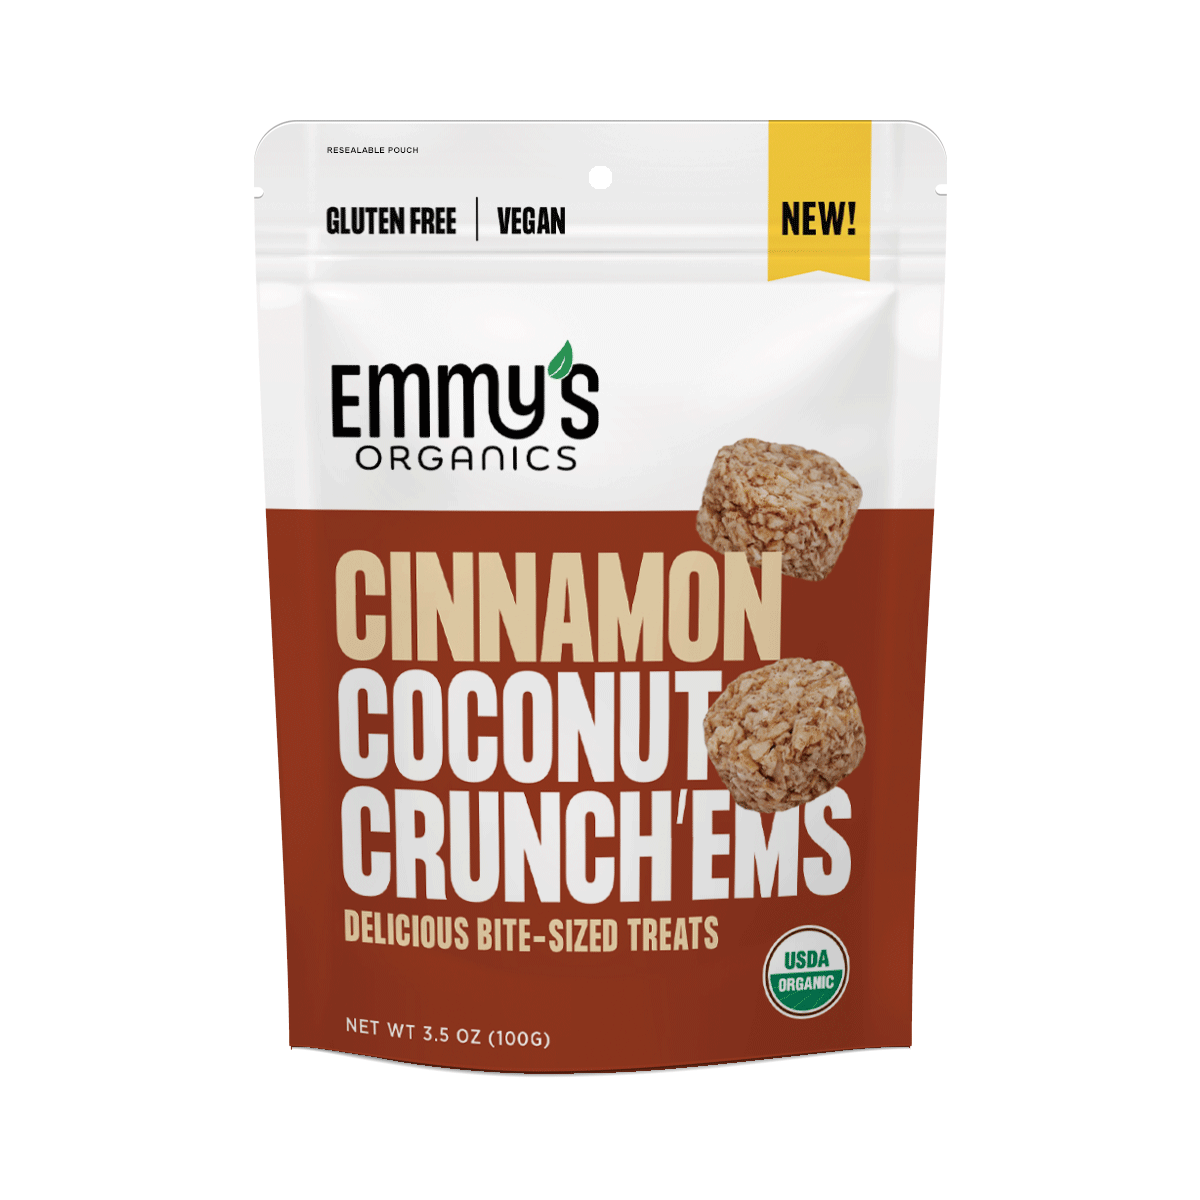 Wholesale Cinnamon Crunch'Ems Mastercase (24 Units)